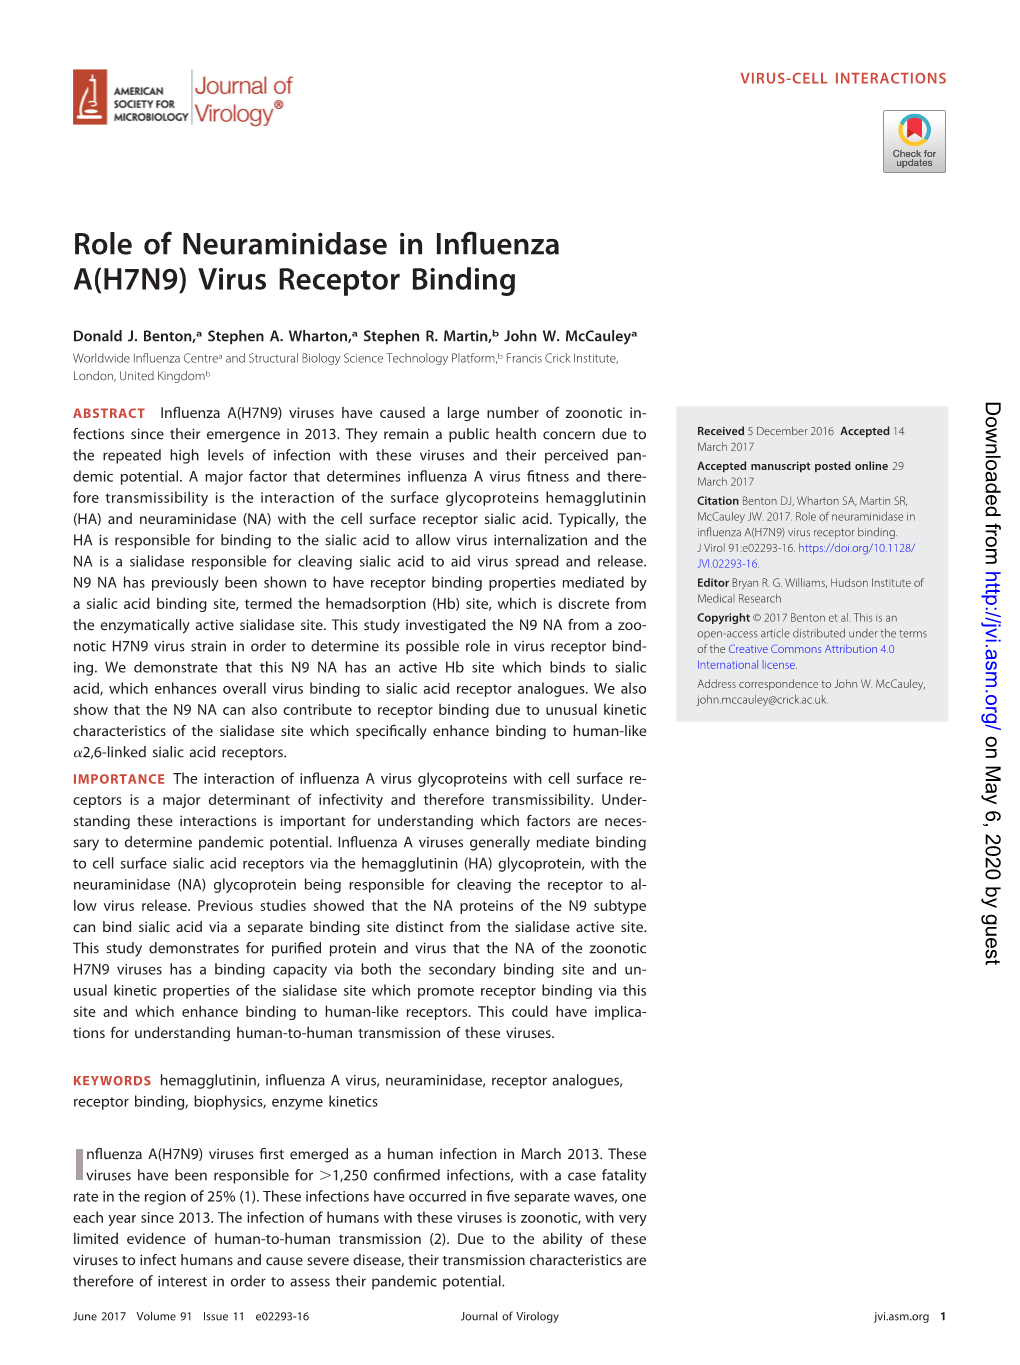 Role of Neuraminidase in Influenza A(H7N9) Virus Receptor Binding